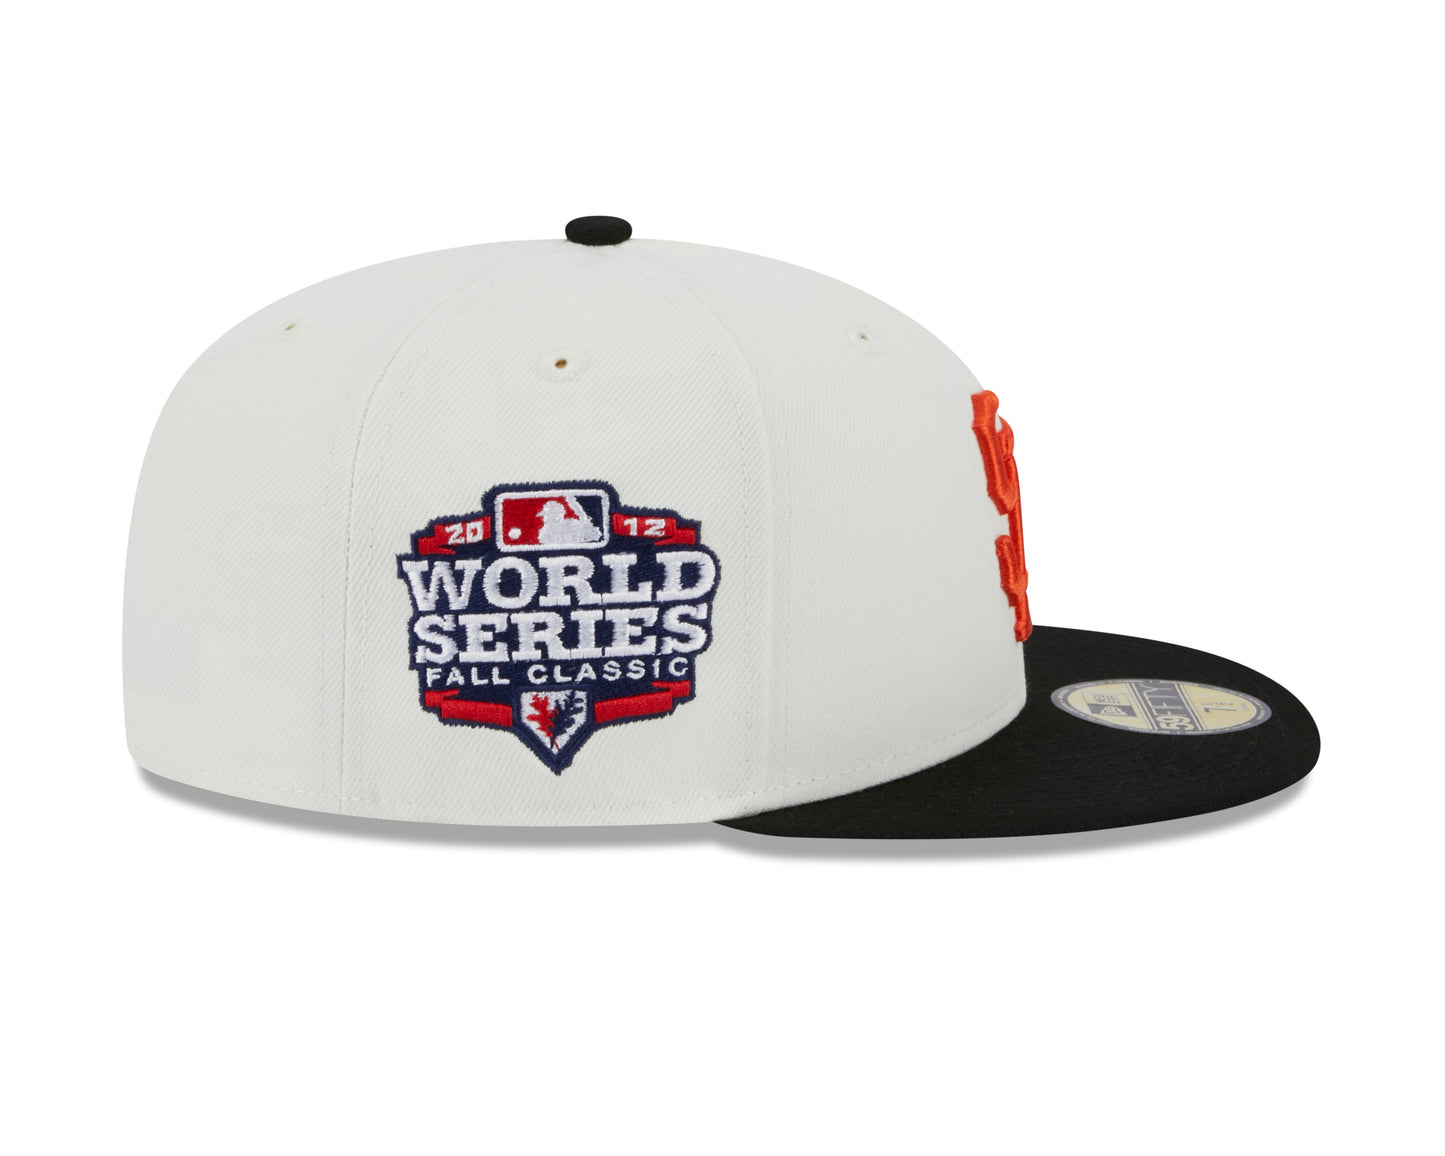 San Francisco Giants 2012 World Series Cream/Black New Era Retro 59FIFTY Fitted Hat